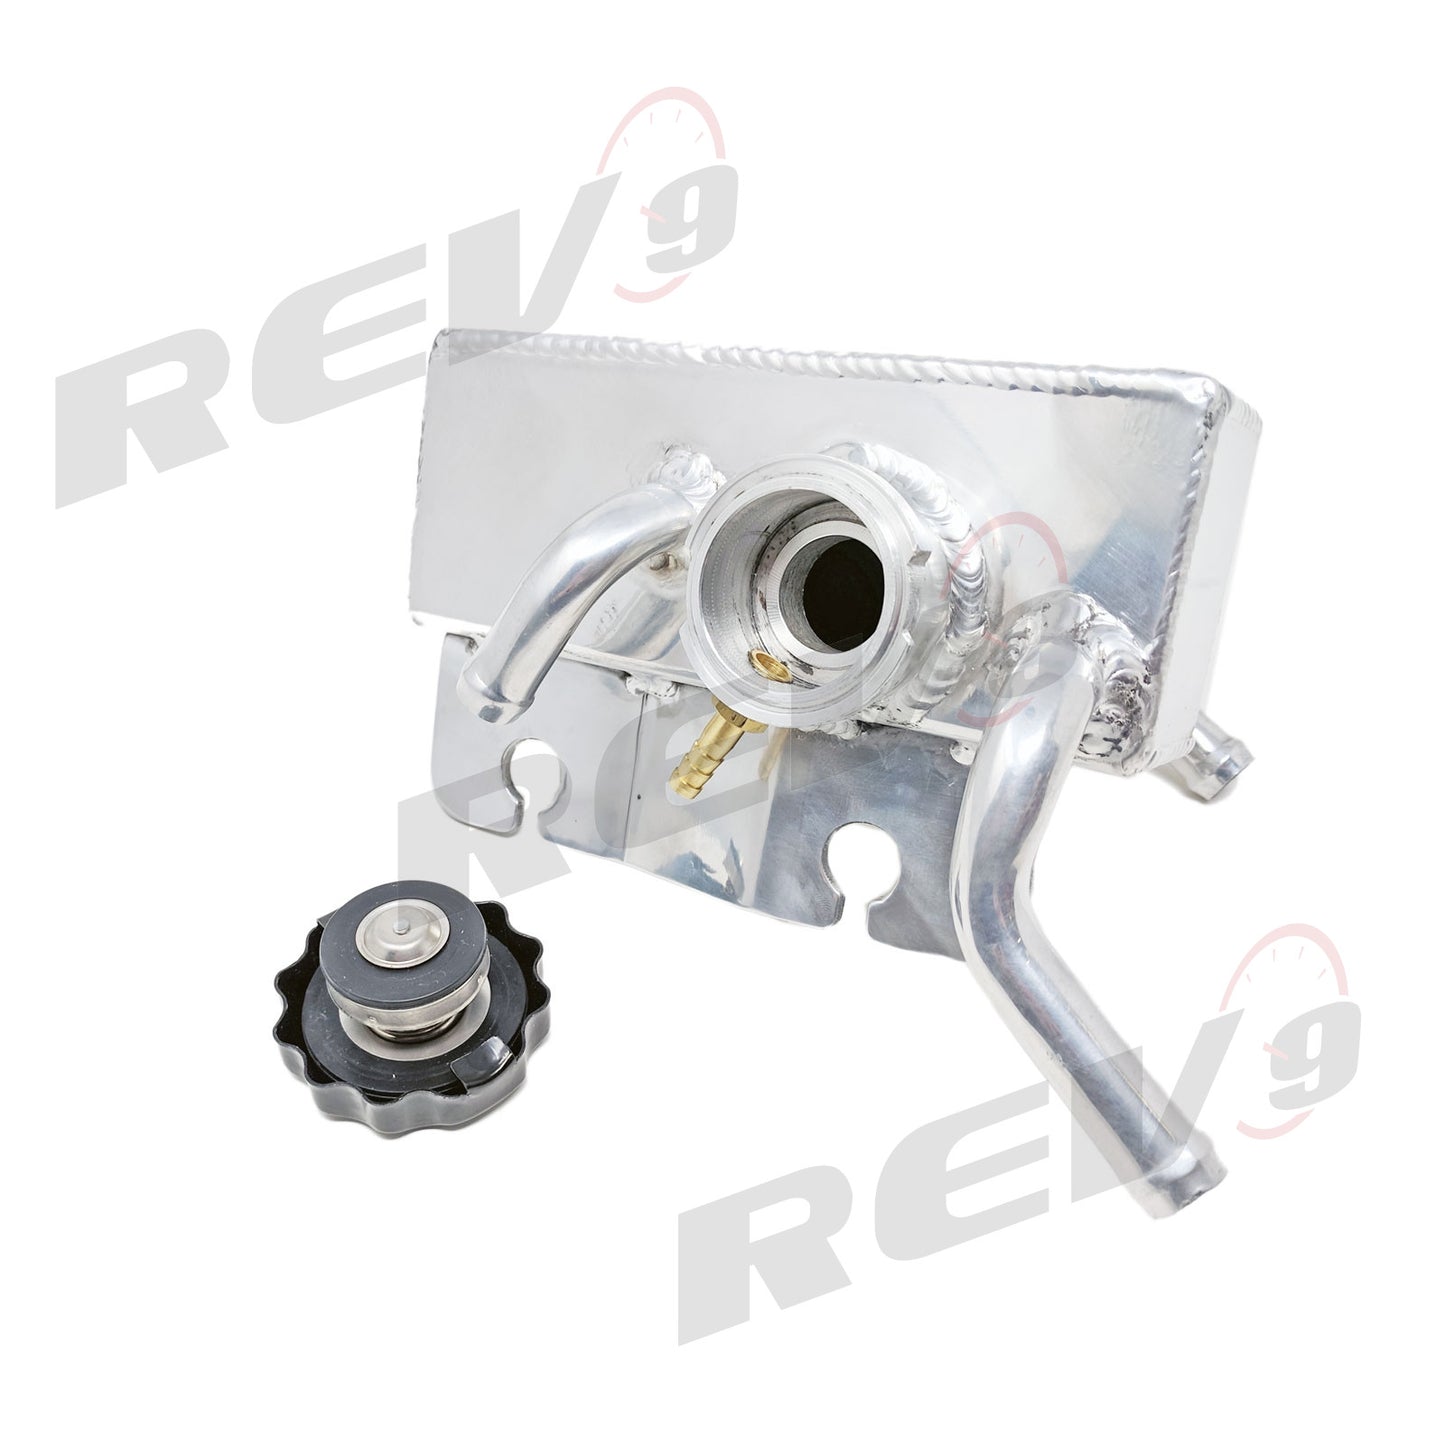 Rev9 Aluminum Coolant Overflow Tank 1.3 Cap for Subaru WRX 08-14 Legacy GT 05-09